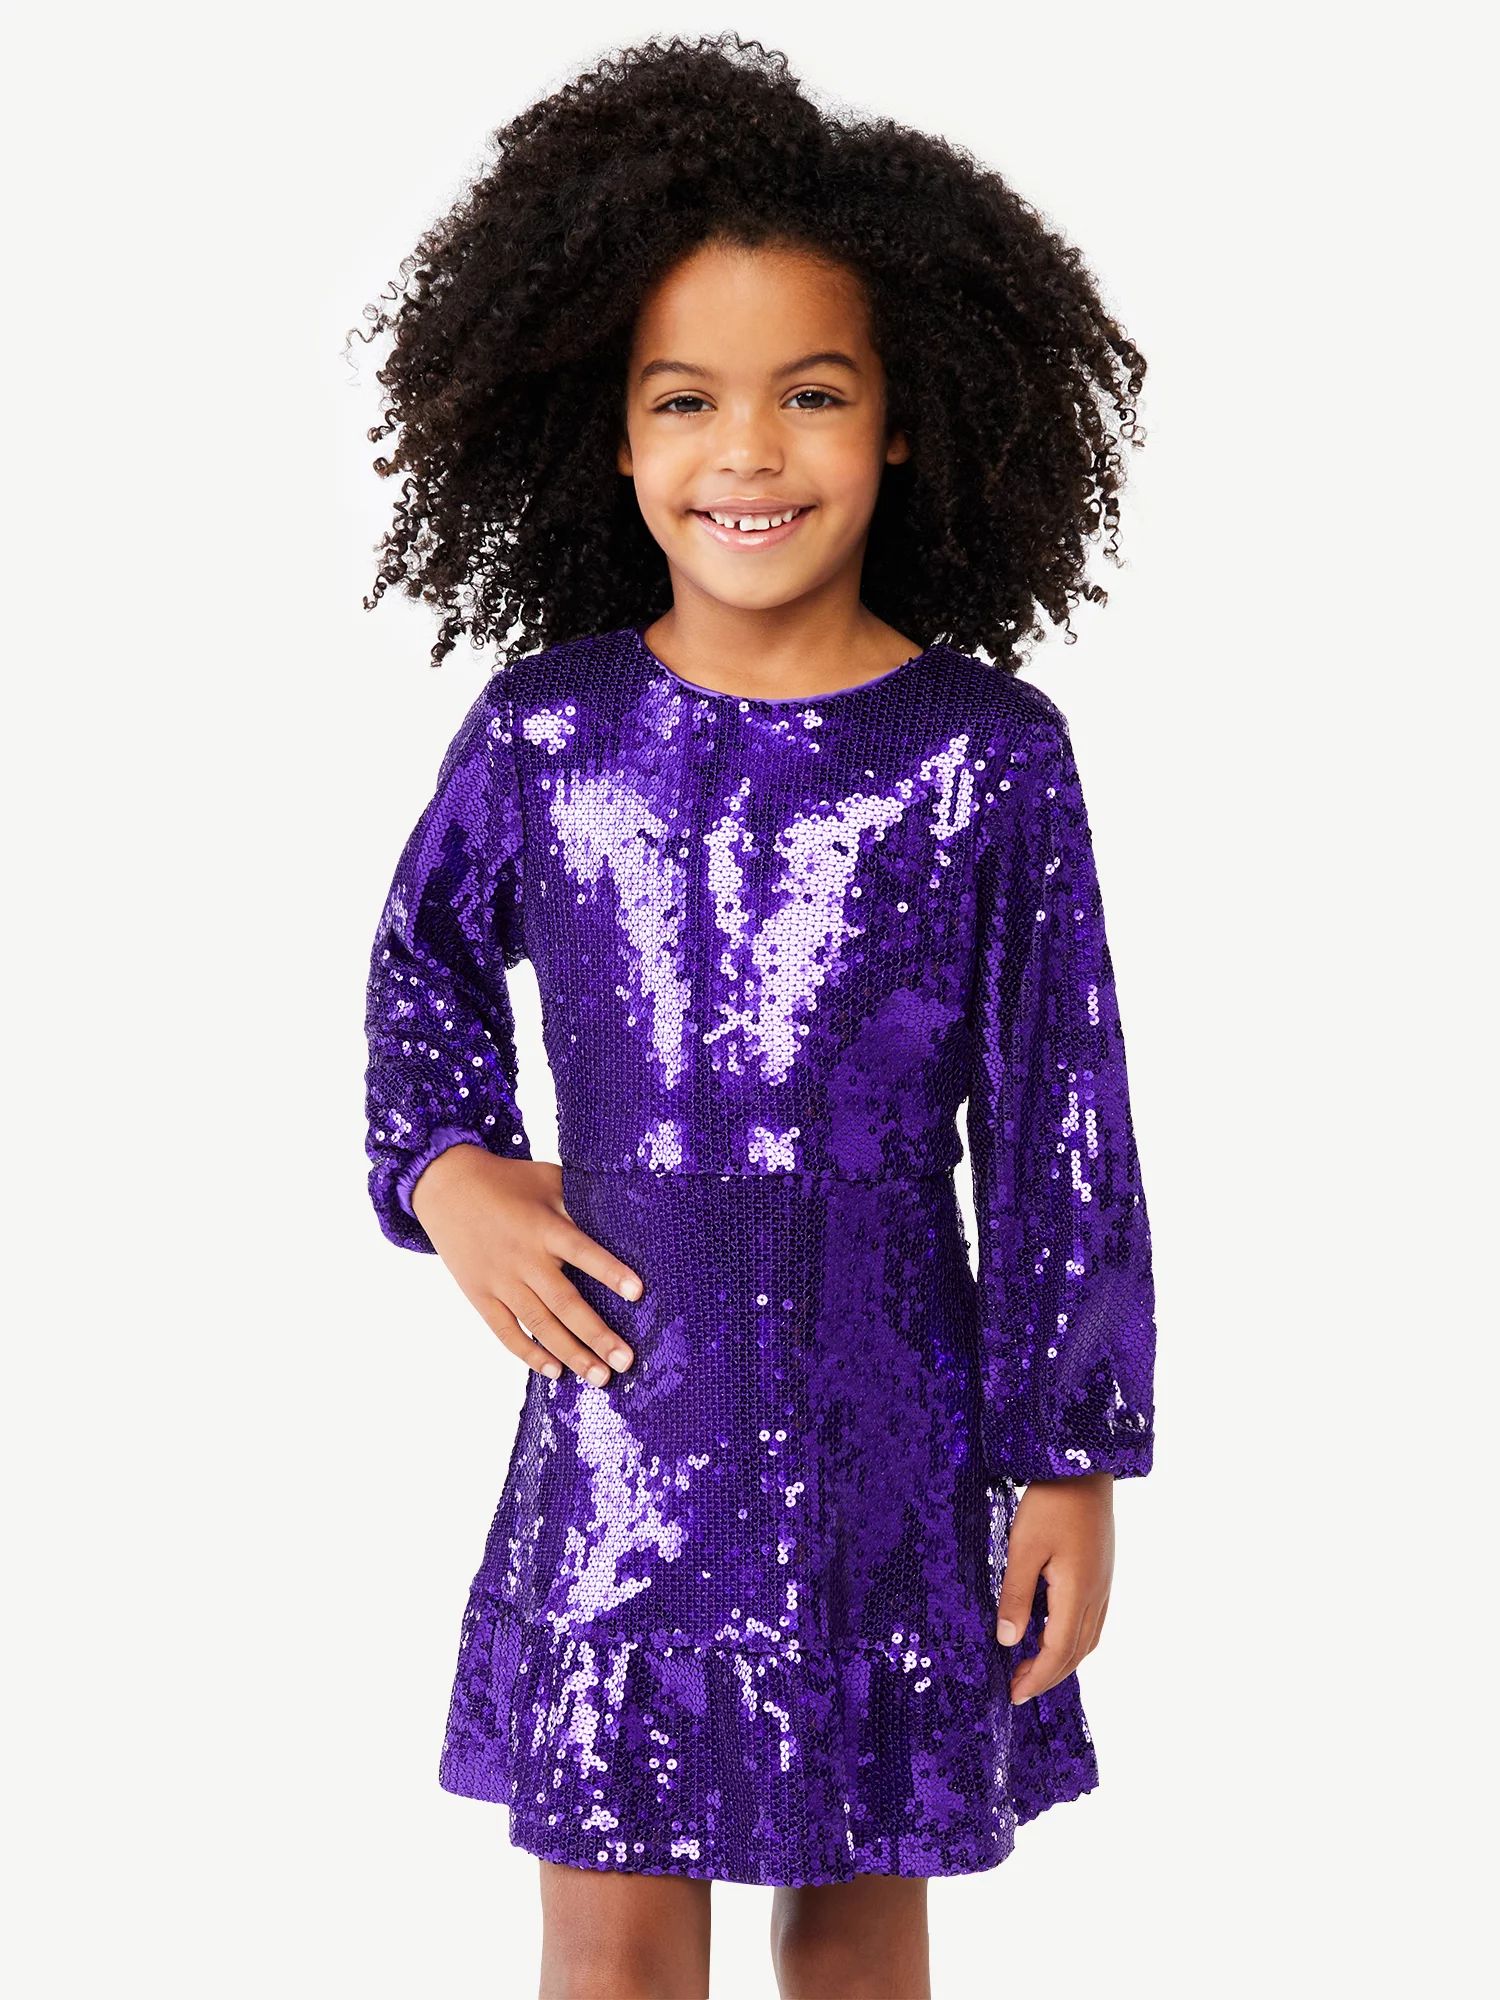 Scoop Girls Ruffle Tier Sequin Dress with Long Sleeves, Sizes 4-12 | Walmart (US)